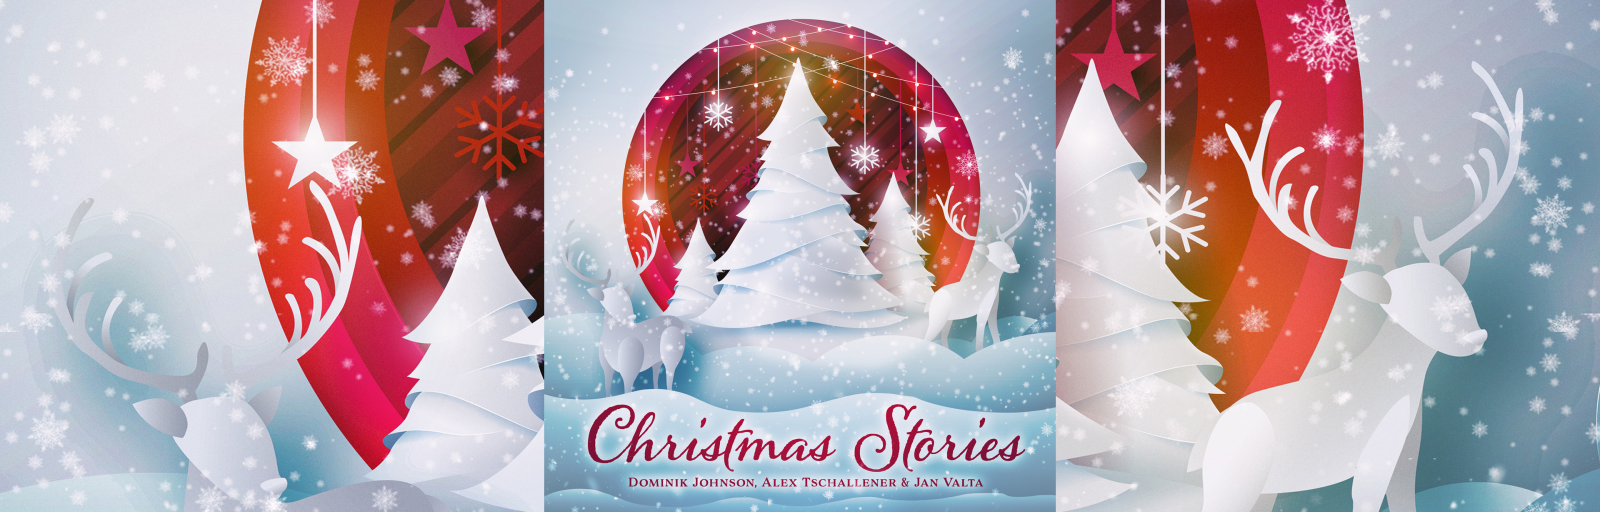 Christmas Stories - De Wolfe Music